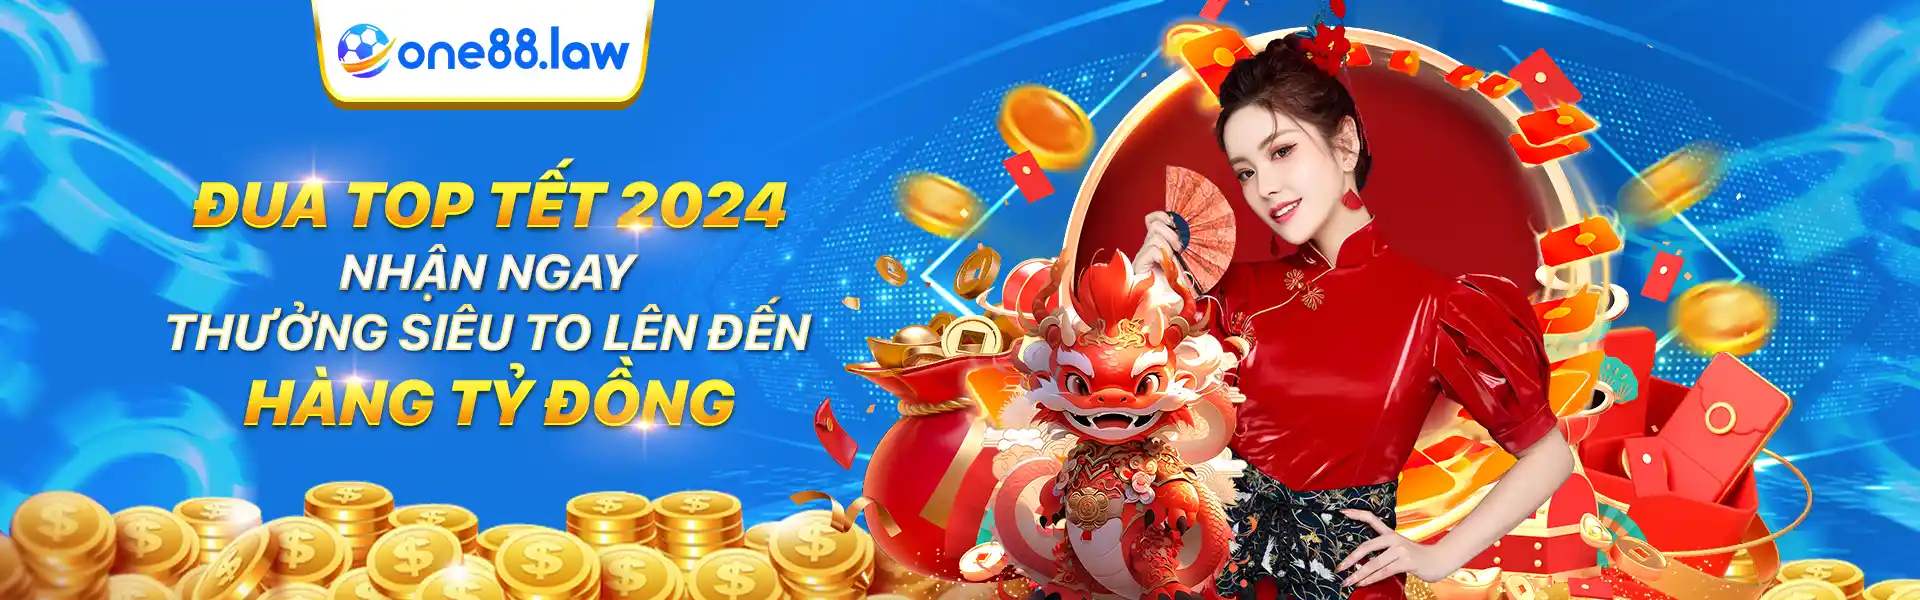 5-dua-top-tet-2024-nhan-ngay-thuong-sieu-to-len-den-hang-ty-dong